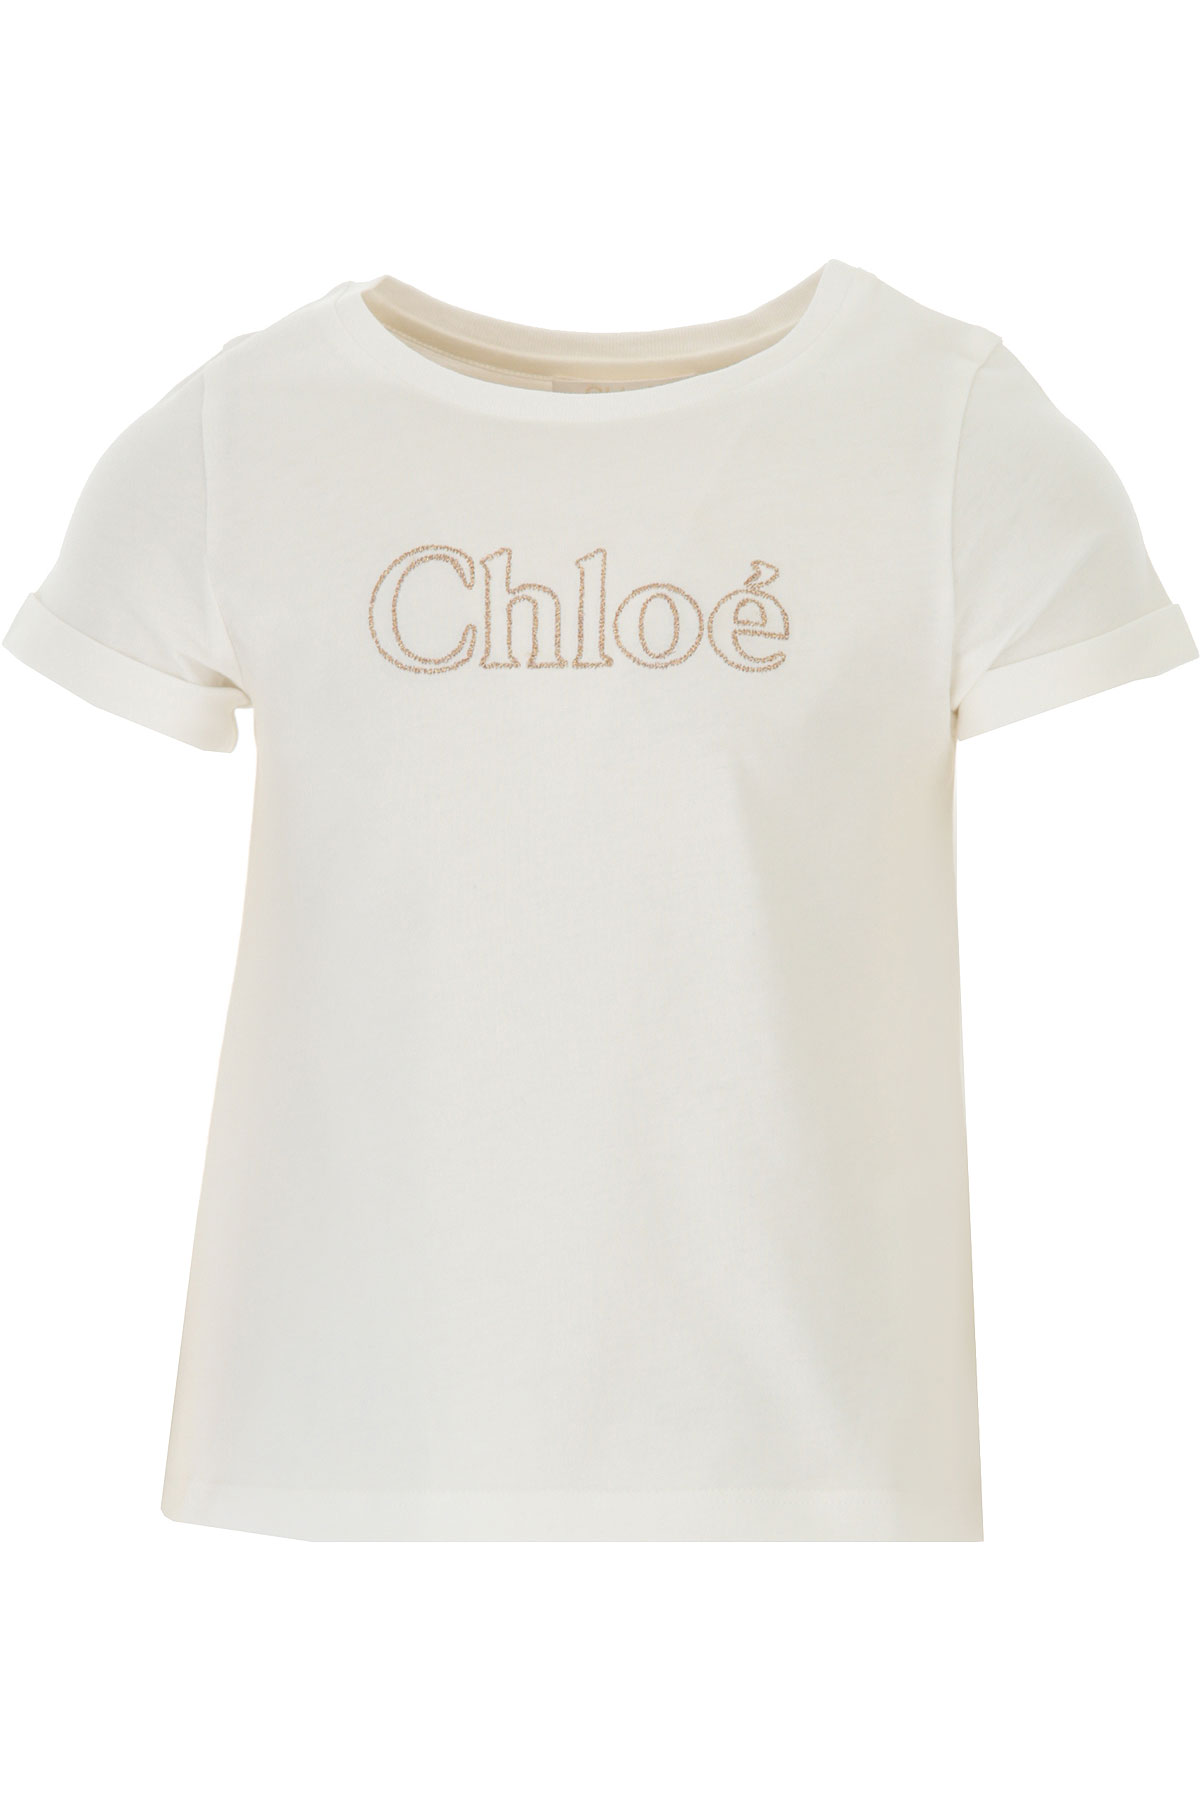 Girls Clothing Chloe, Style code: c15b84-117-